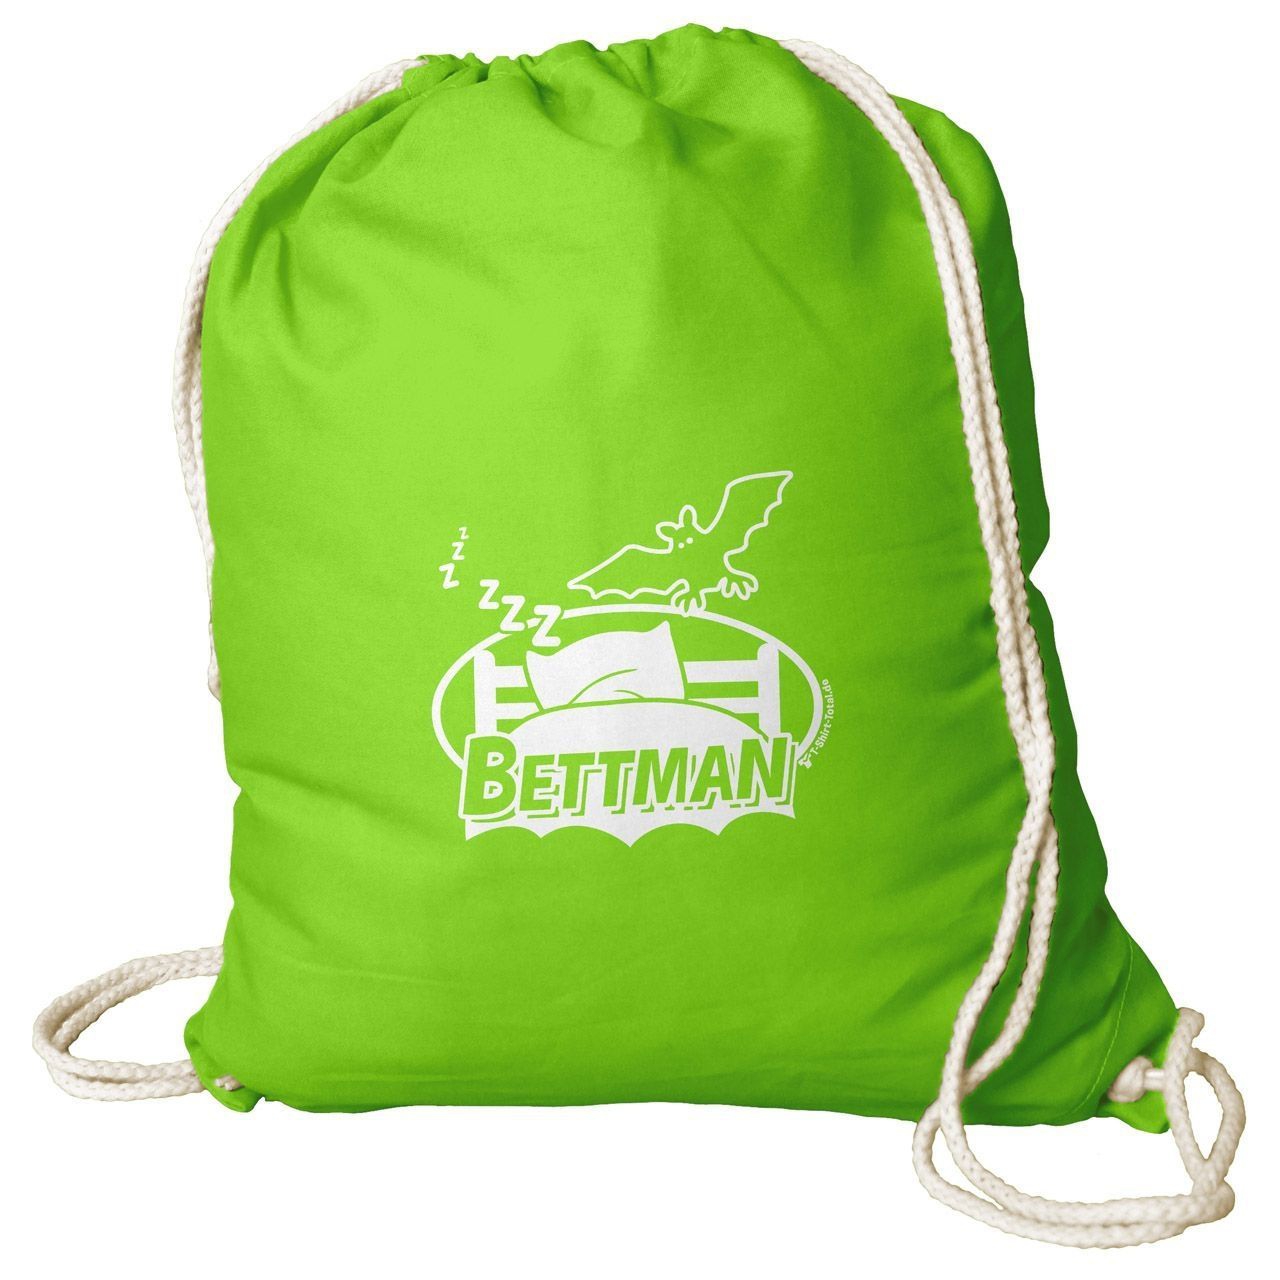 Bettman Rucksack Beutel hellgrün